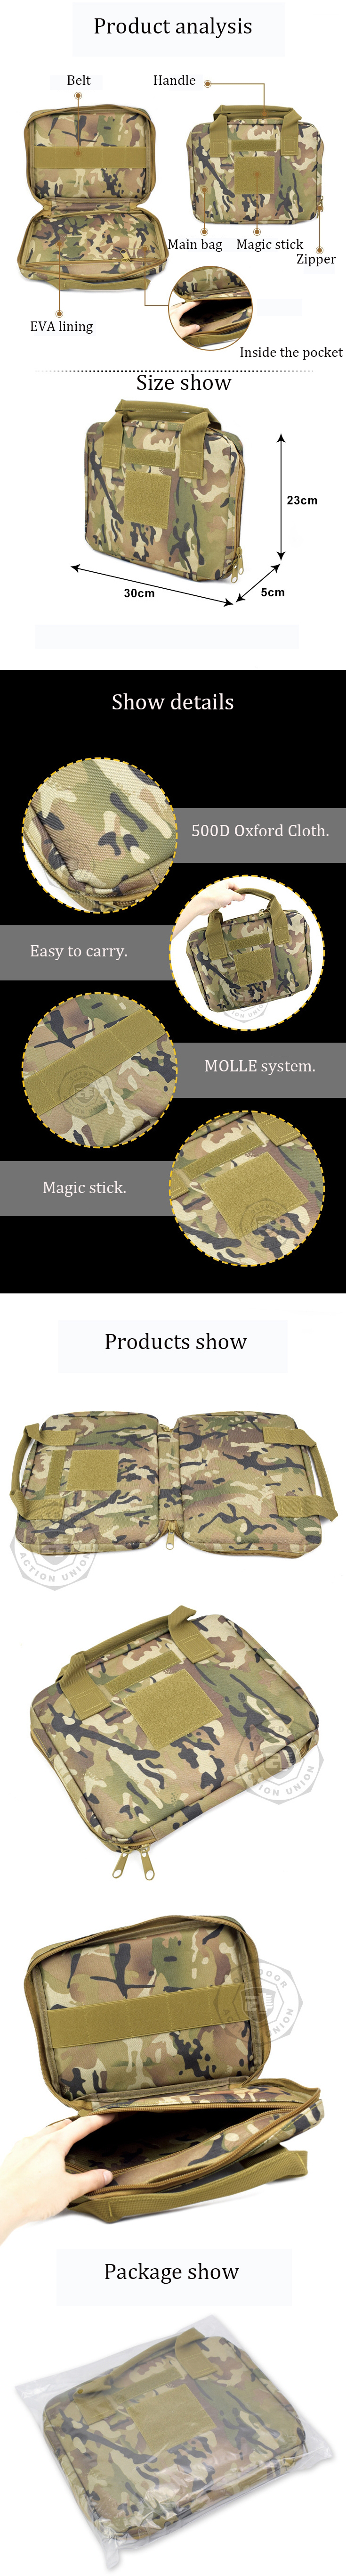 ACTION-UNION-GB004-500D-Oxford-Cloth-Tactical-Bag-Outdoor-Portable-Camouflage-Handbag-1535284-2